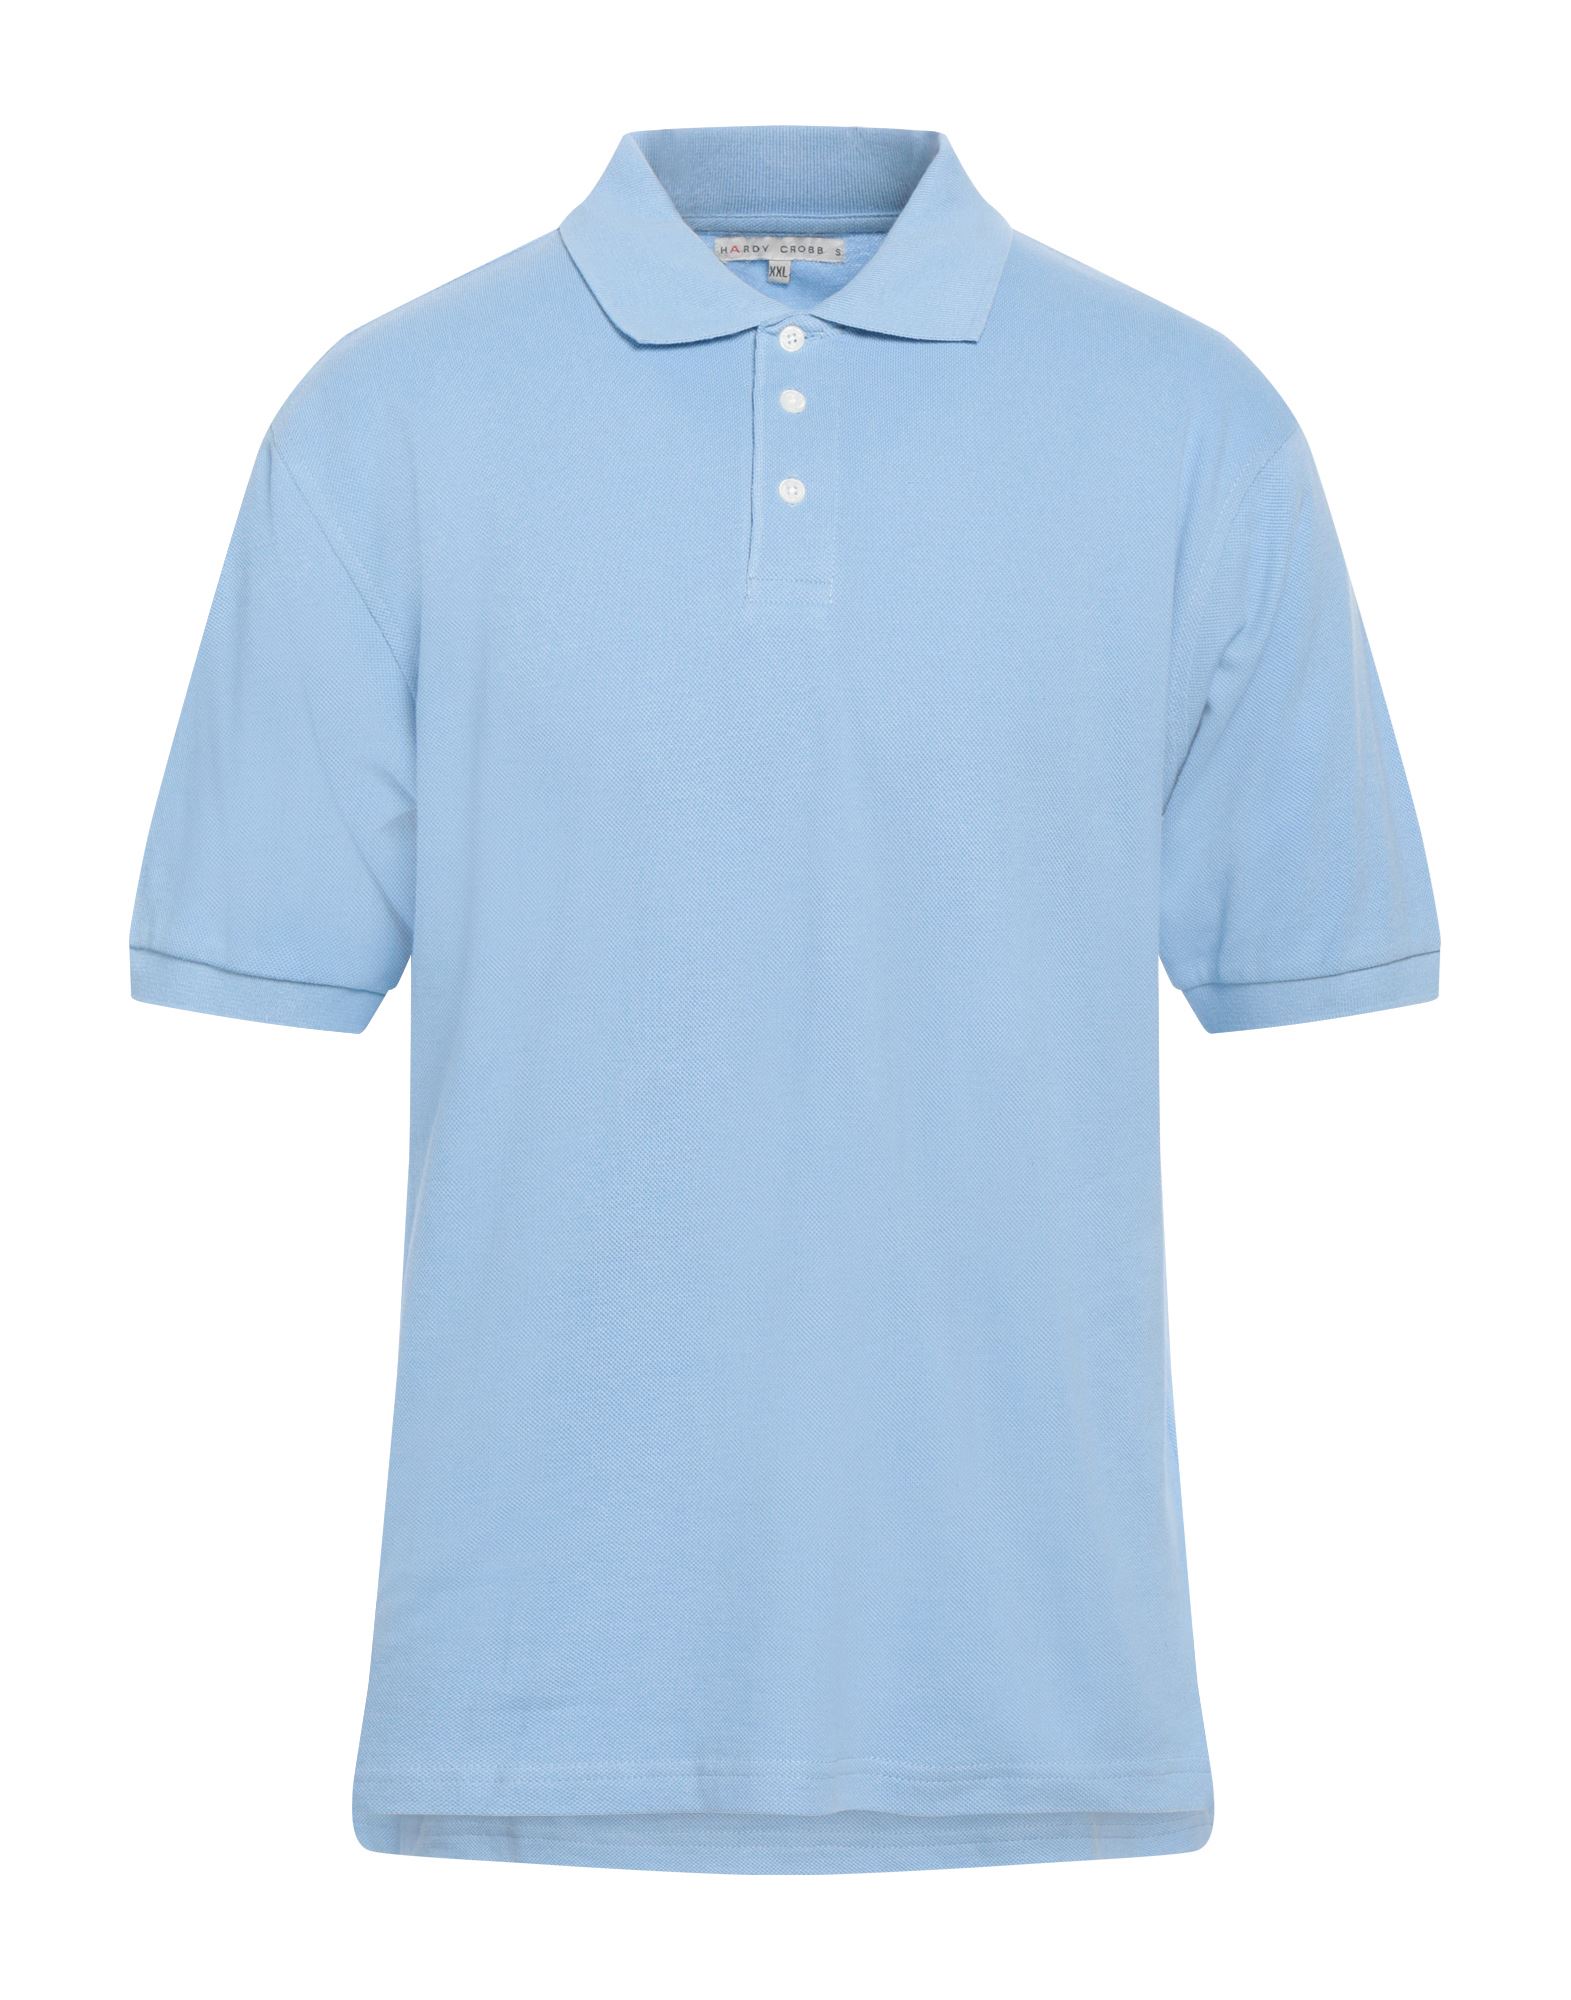 Hardy Crobb's Man Polo Shirt Sky Blue Size Xxl Cotton